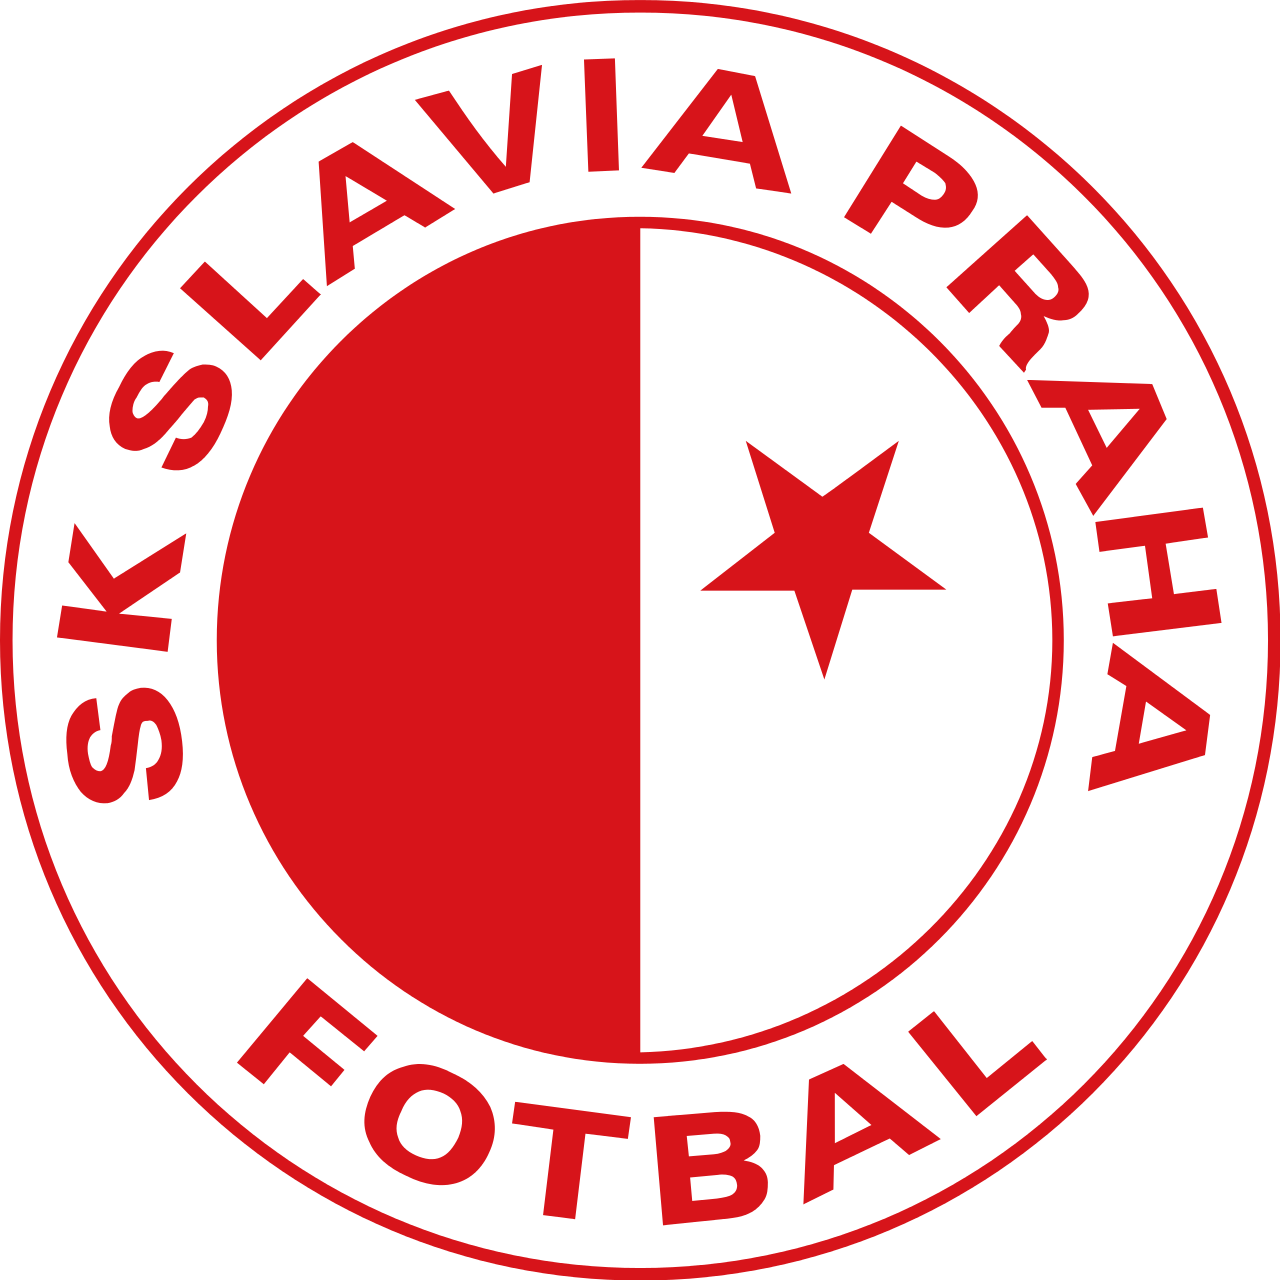 SK Slavia Prague (Czech Republic)